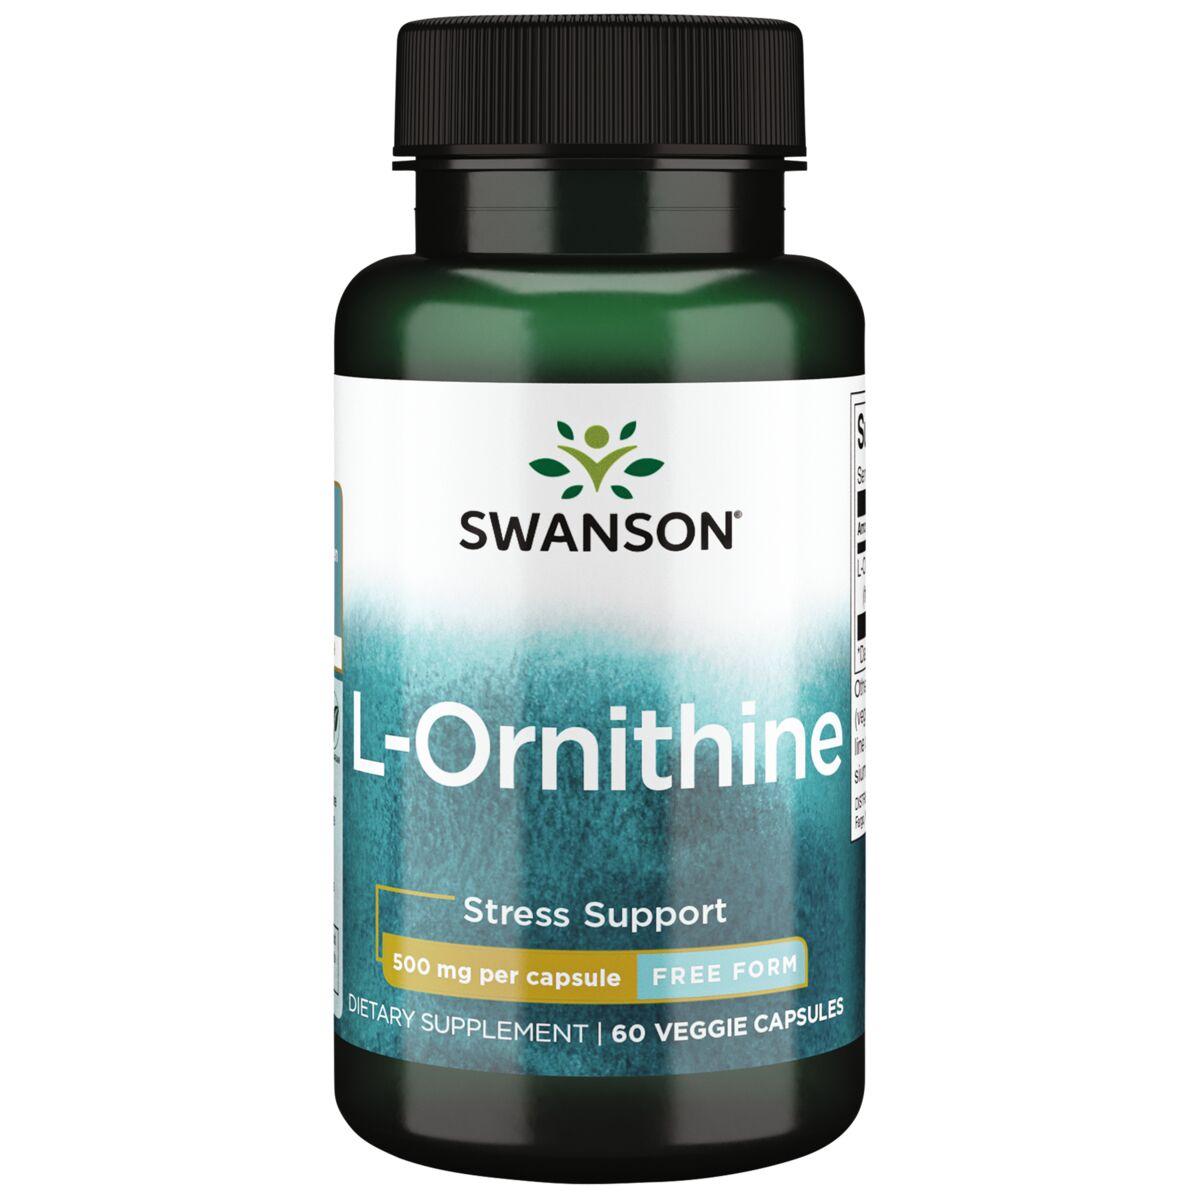 Swanson Premium L-Ornithine - Free Form Supplement Vitamin | 500 mg | 60 Veg Caps